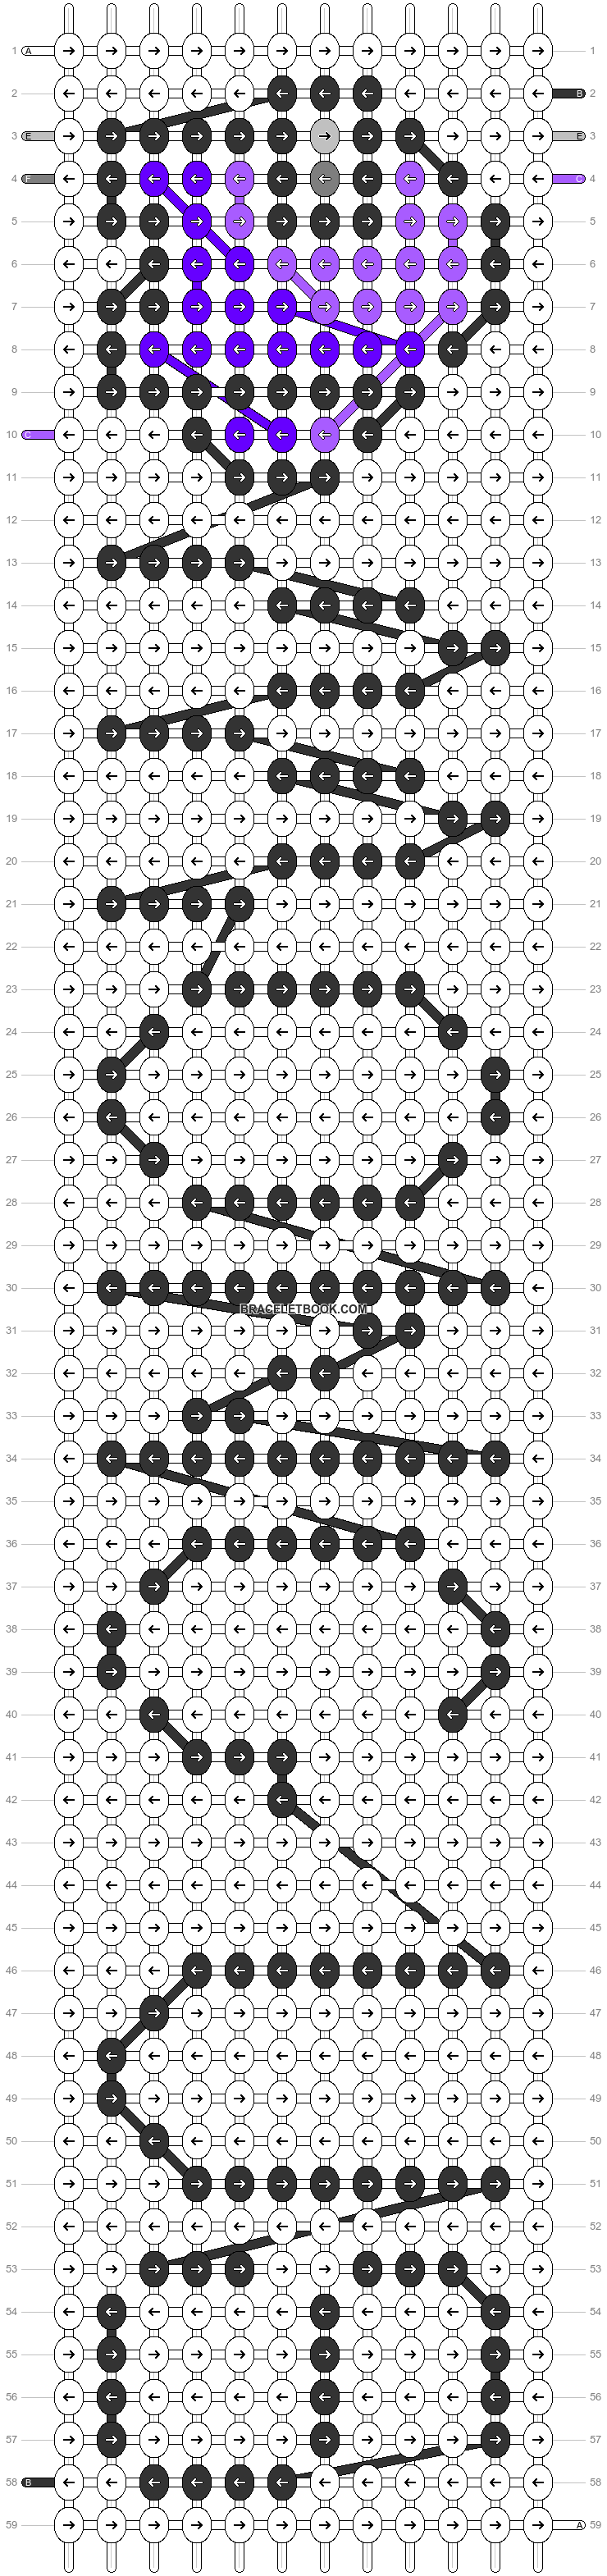 Alpha pattern #55655 variation #96367 pattern